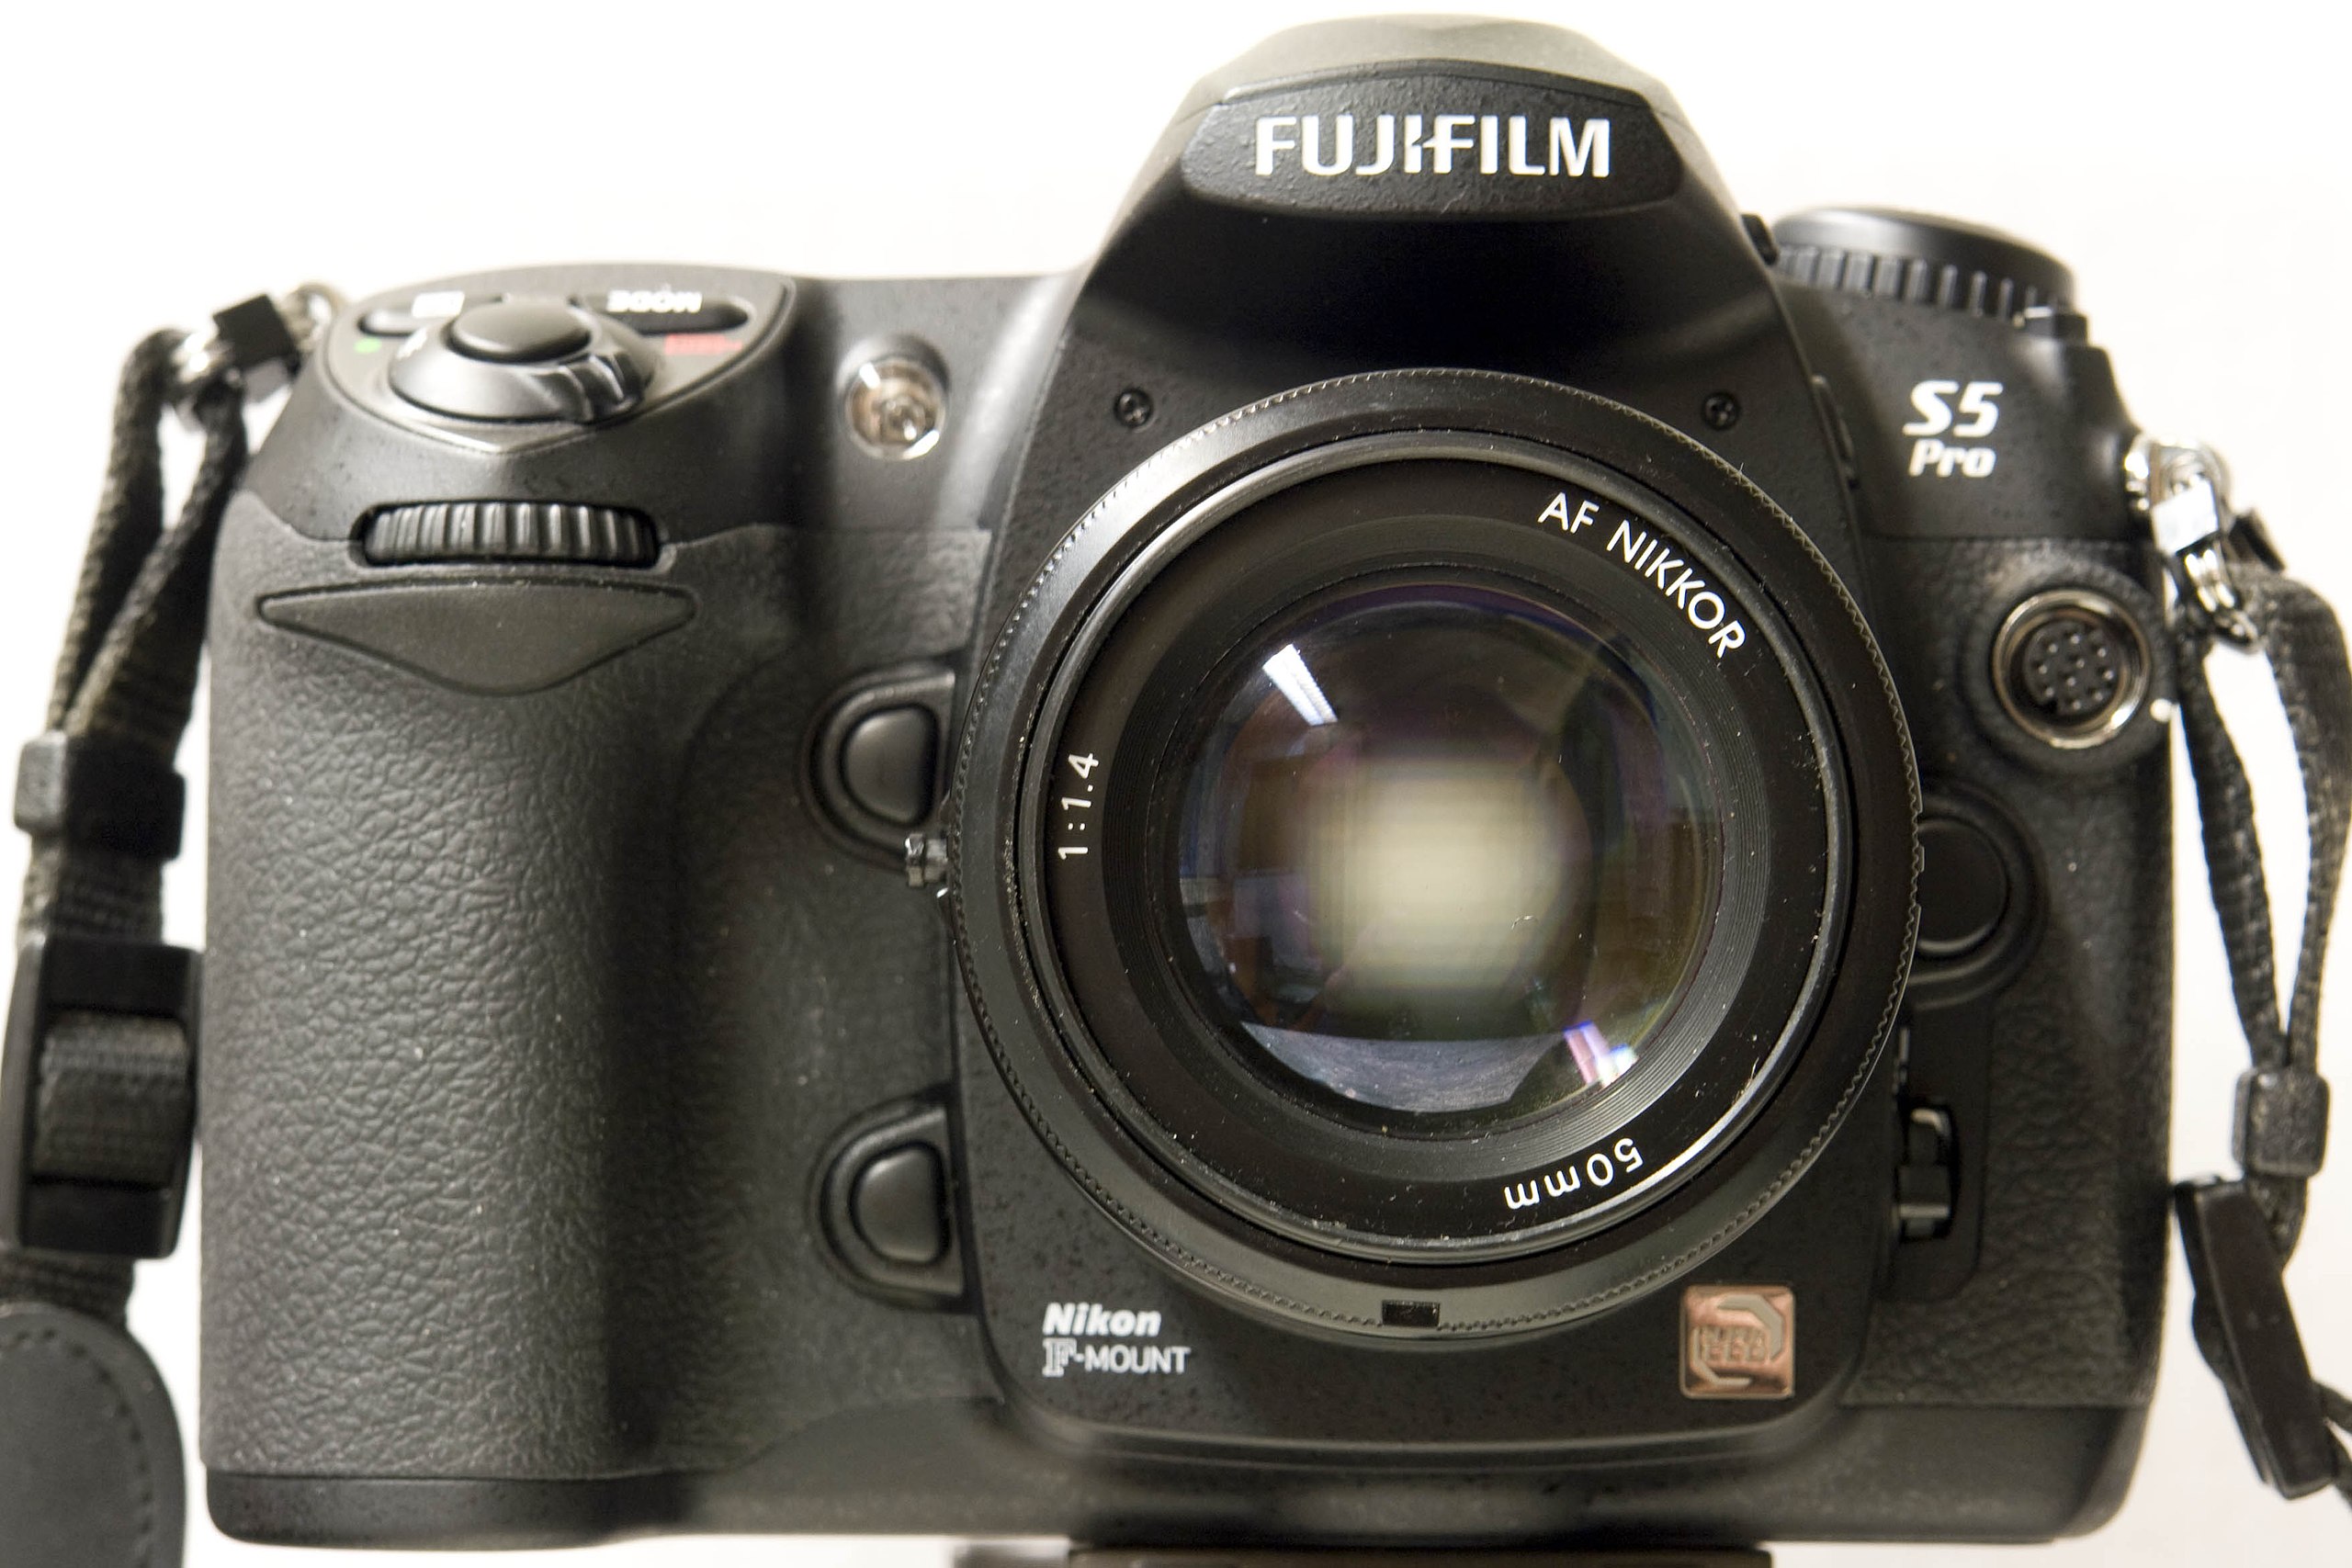 Professor Sceptisch Verduisteren File:Fujifilm FinePix S5 Pro.jpg - Wikipedia